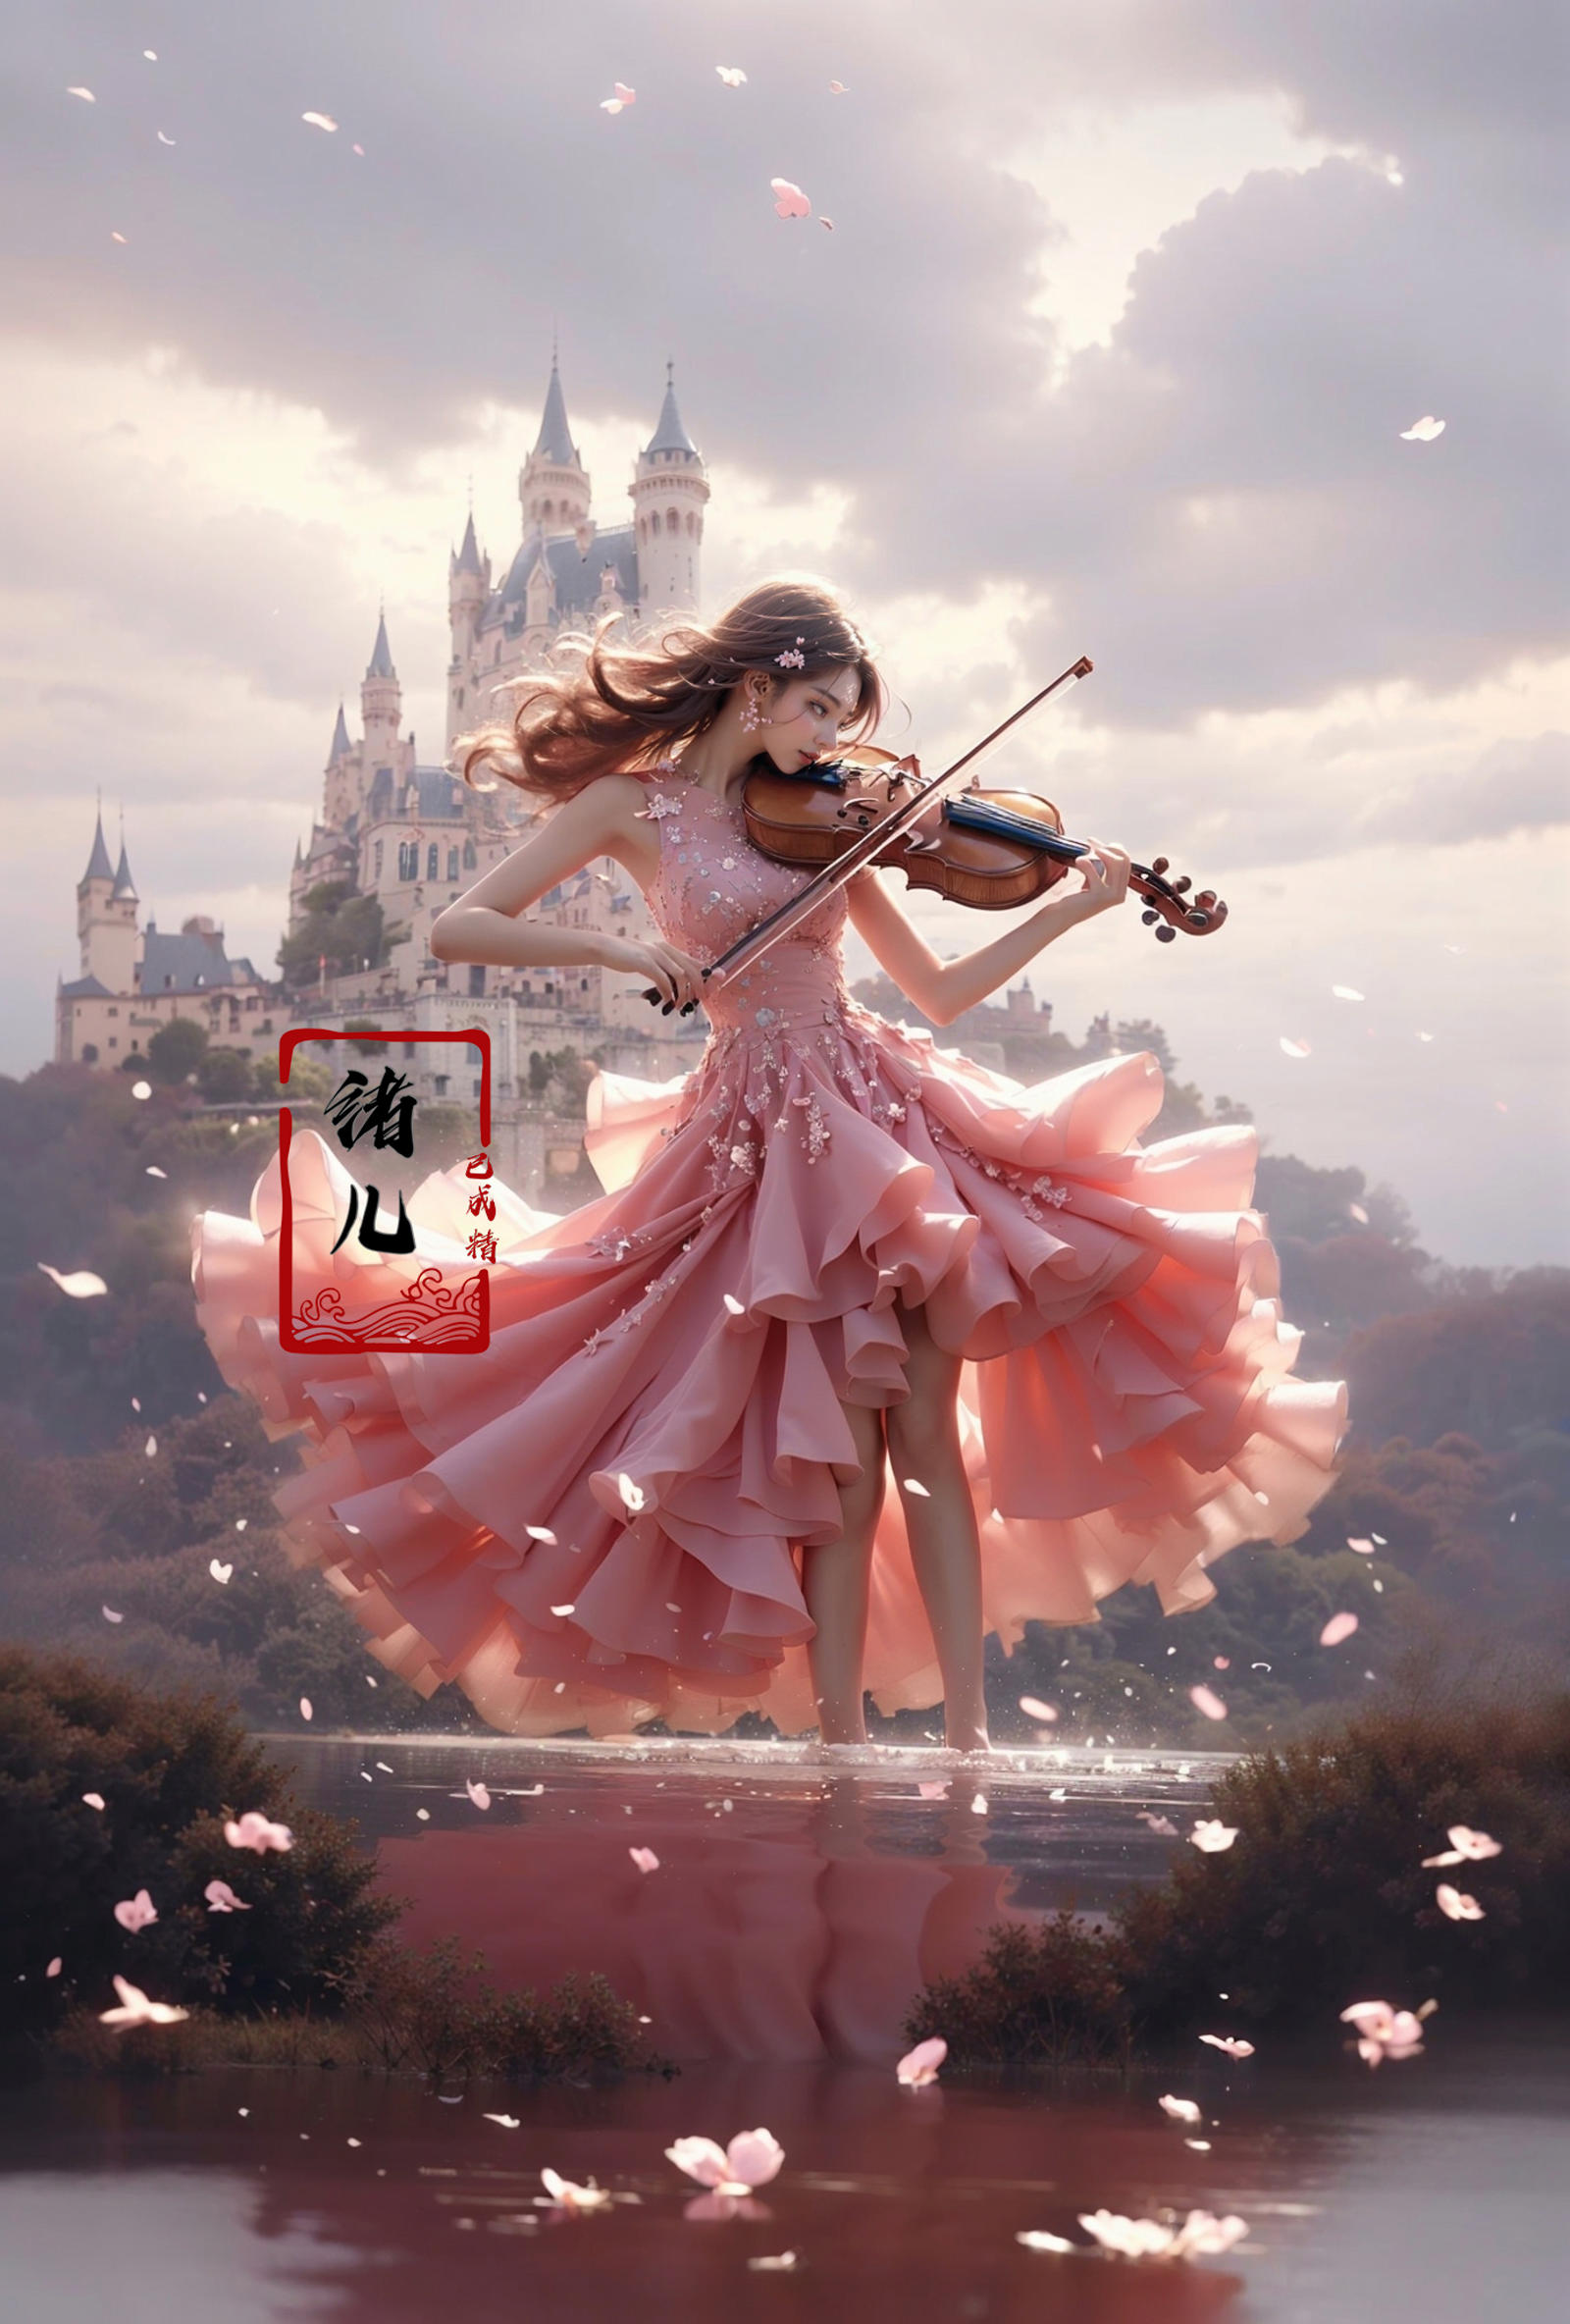 绪儿-小提琴 violin image by XRYCJ